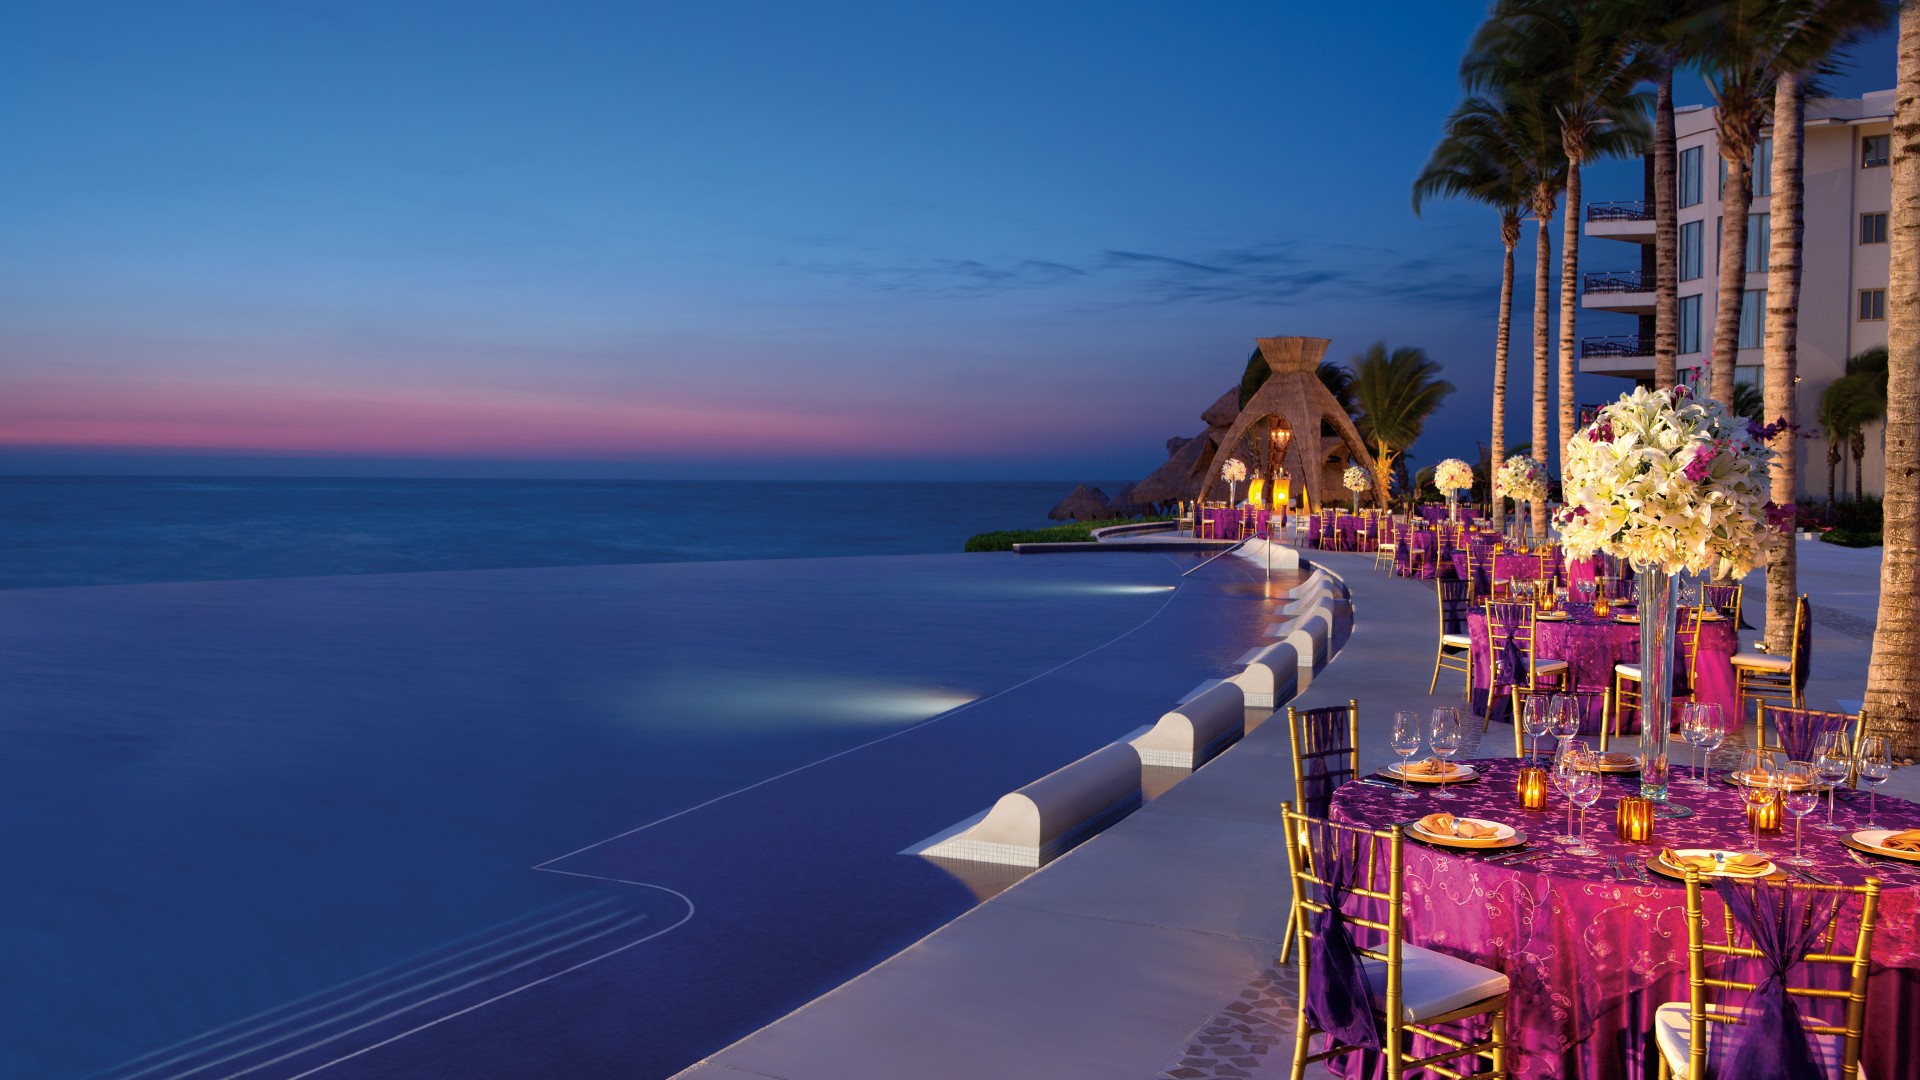 Dreams Riviera Cancun Resort, Best Hotels of 2017, tourism, travel, resort, vacation, sea, ocean, sunset, purple (horizontal)